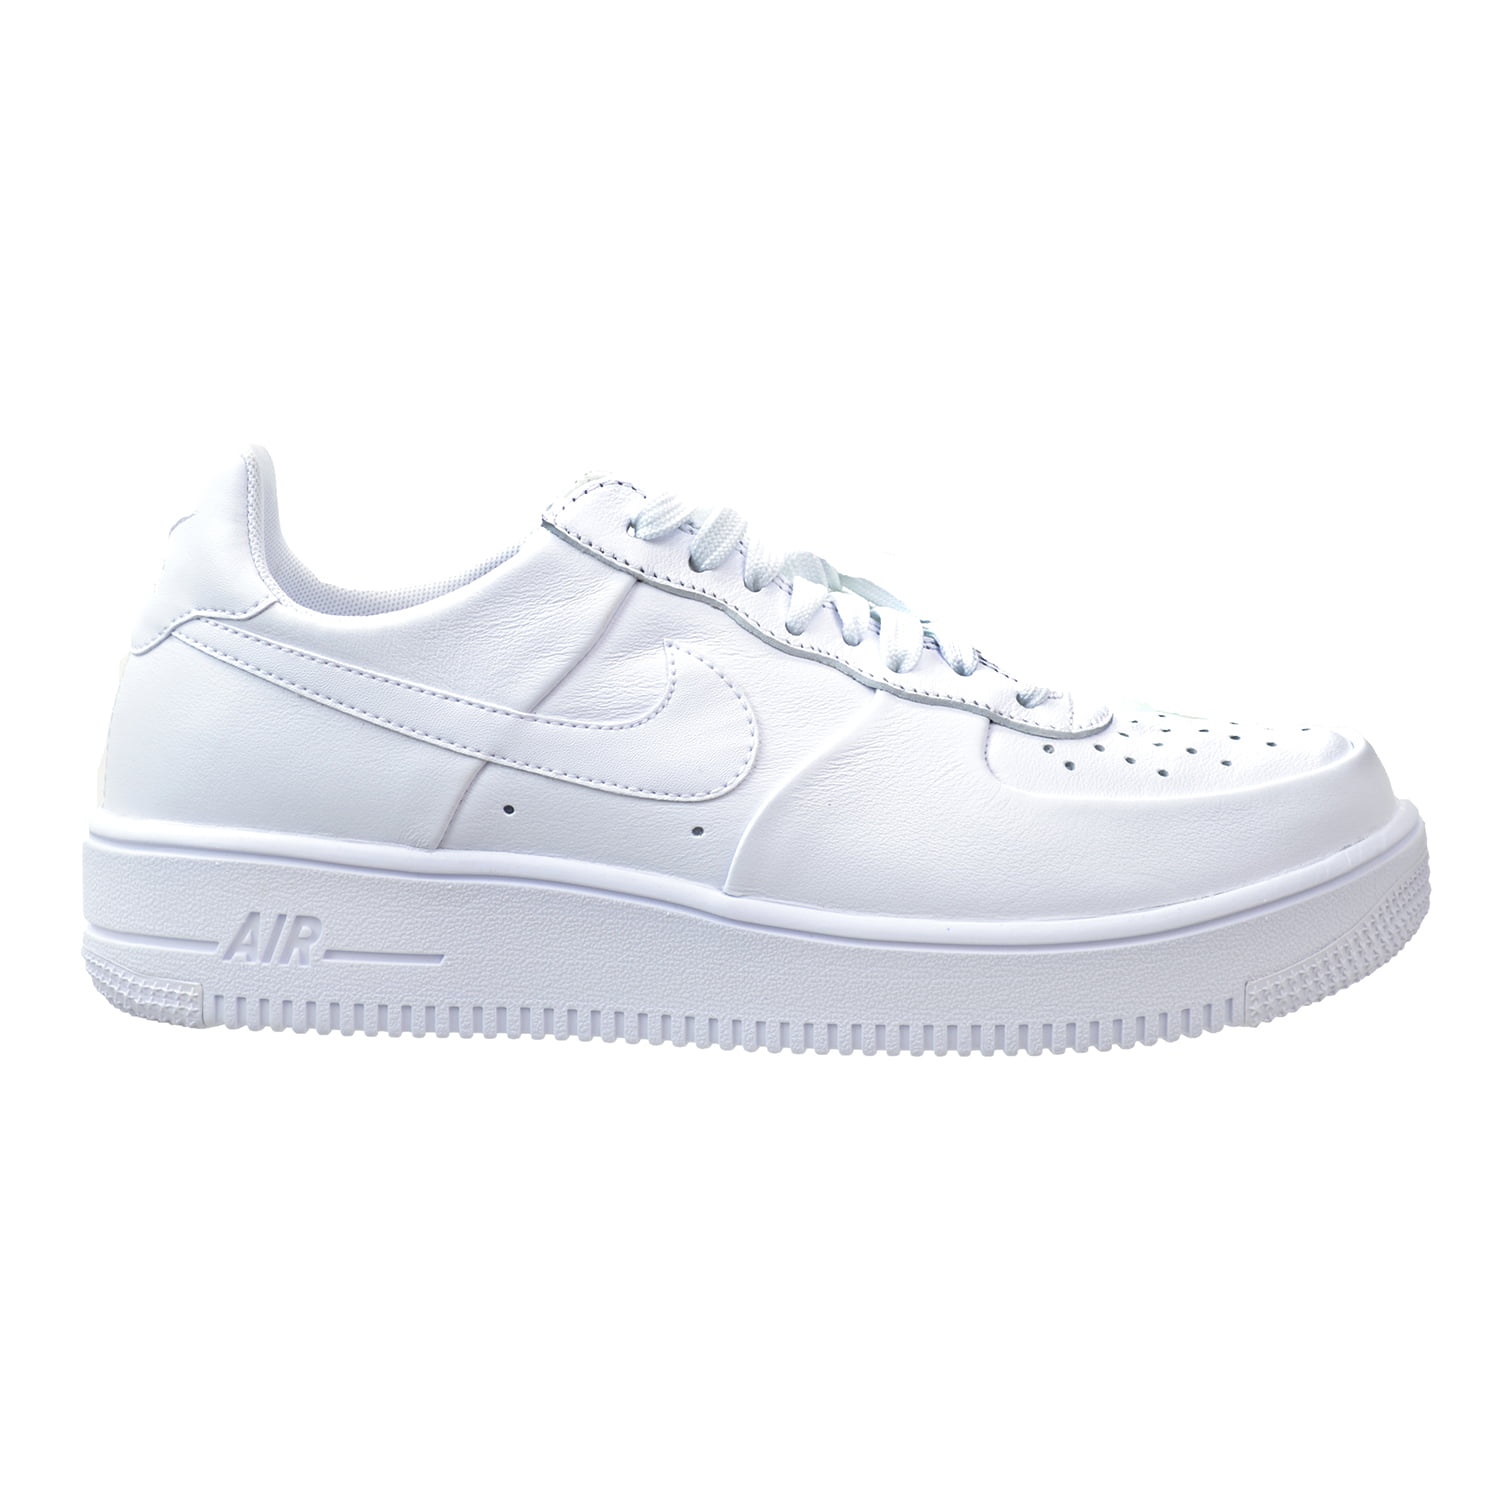 Nike Air Force 1 Men's Shoes White/White Walmart.com